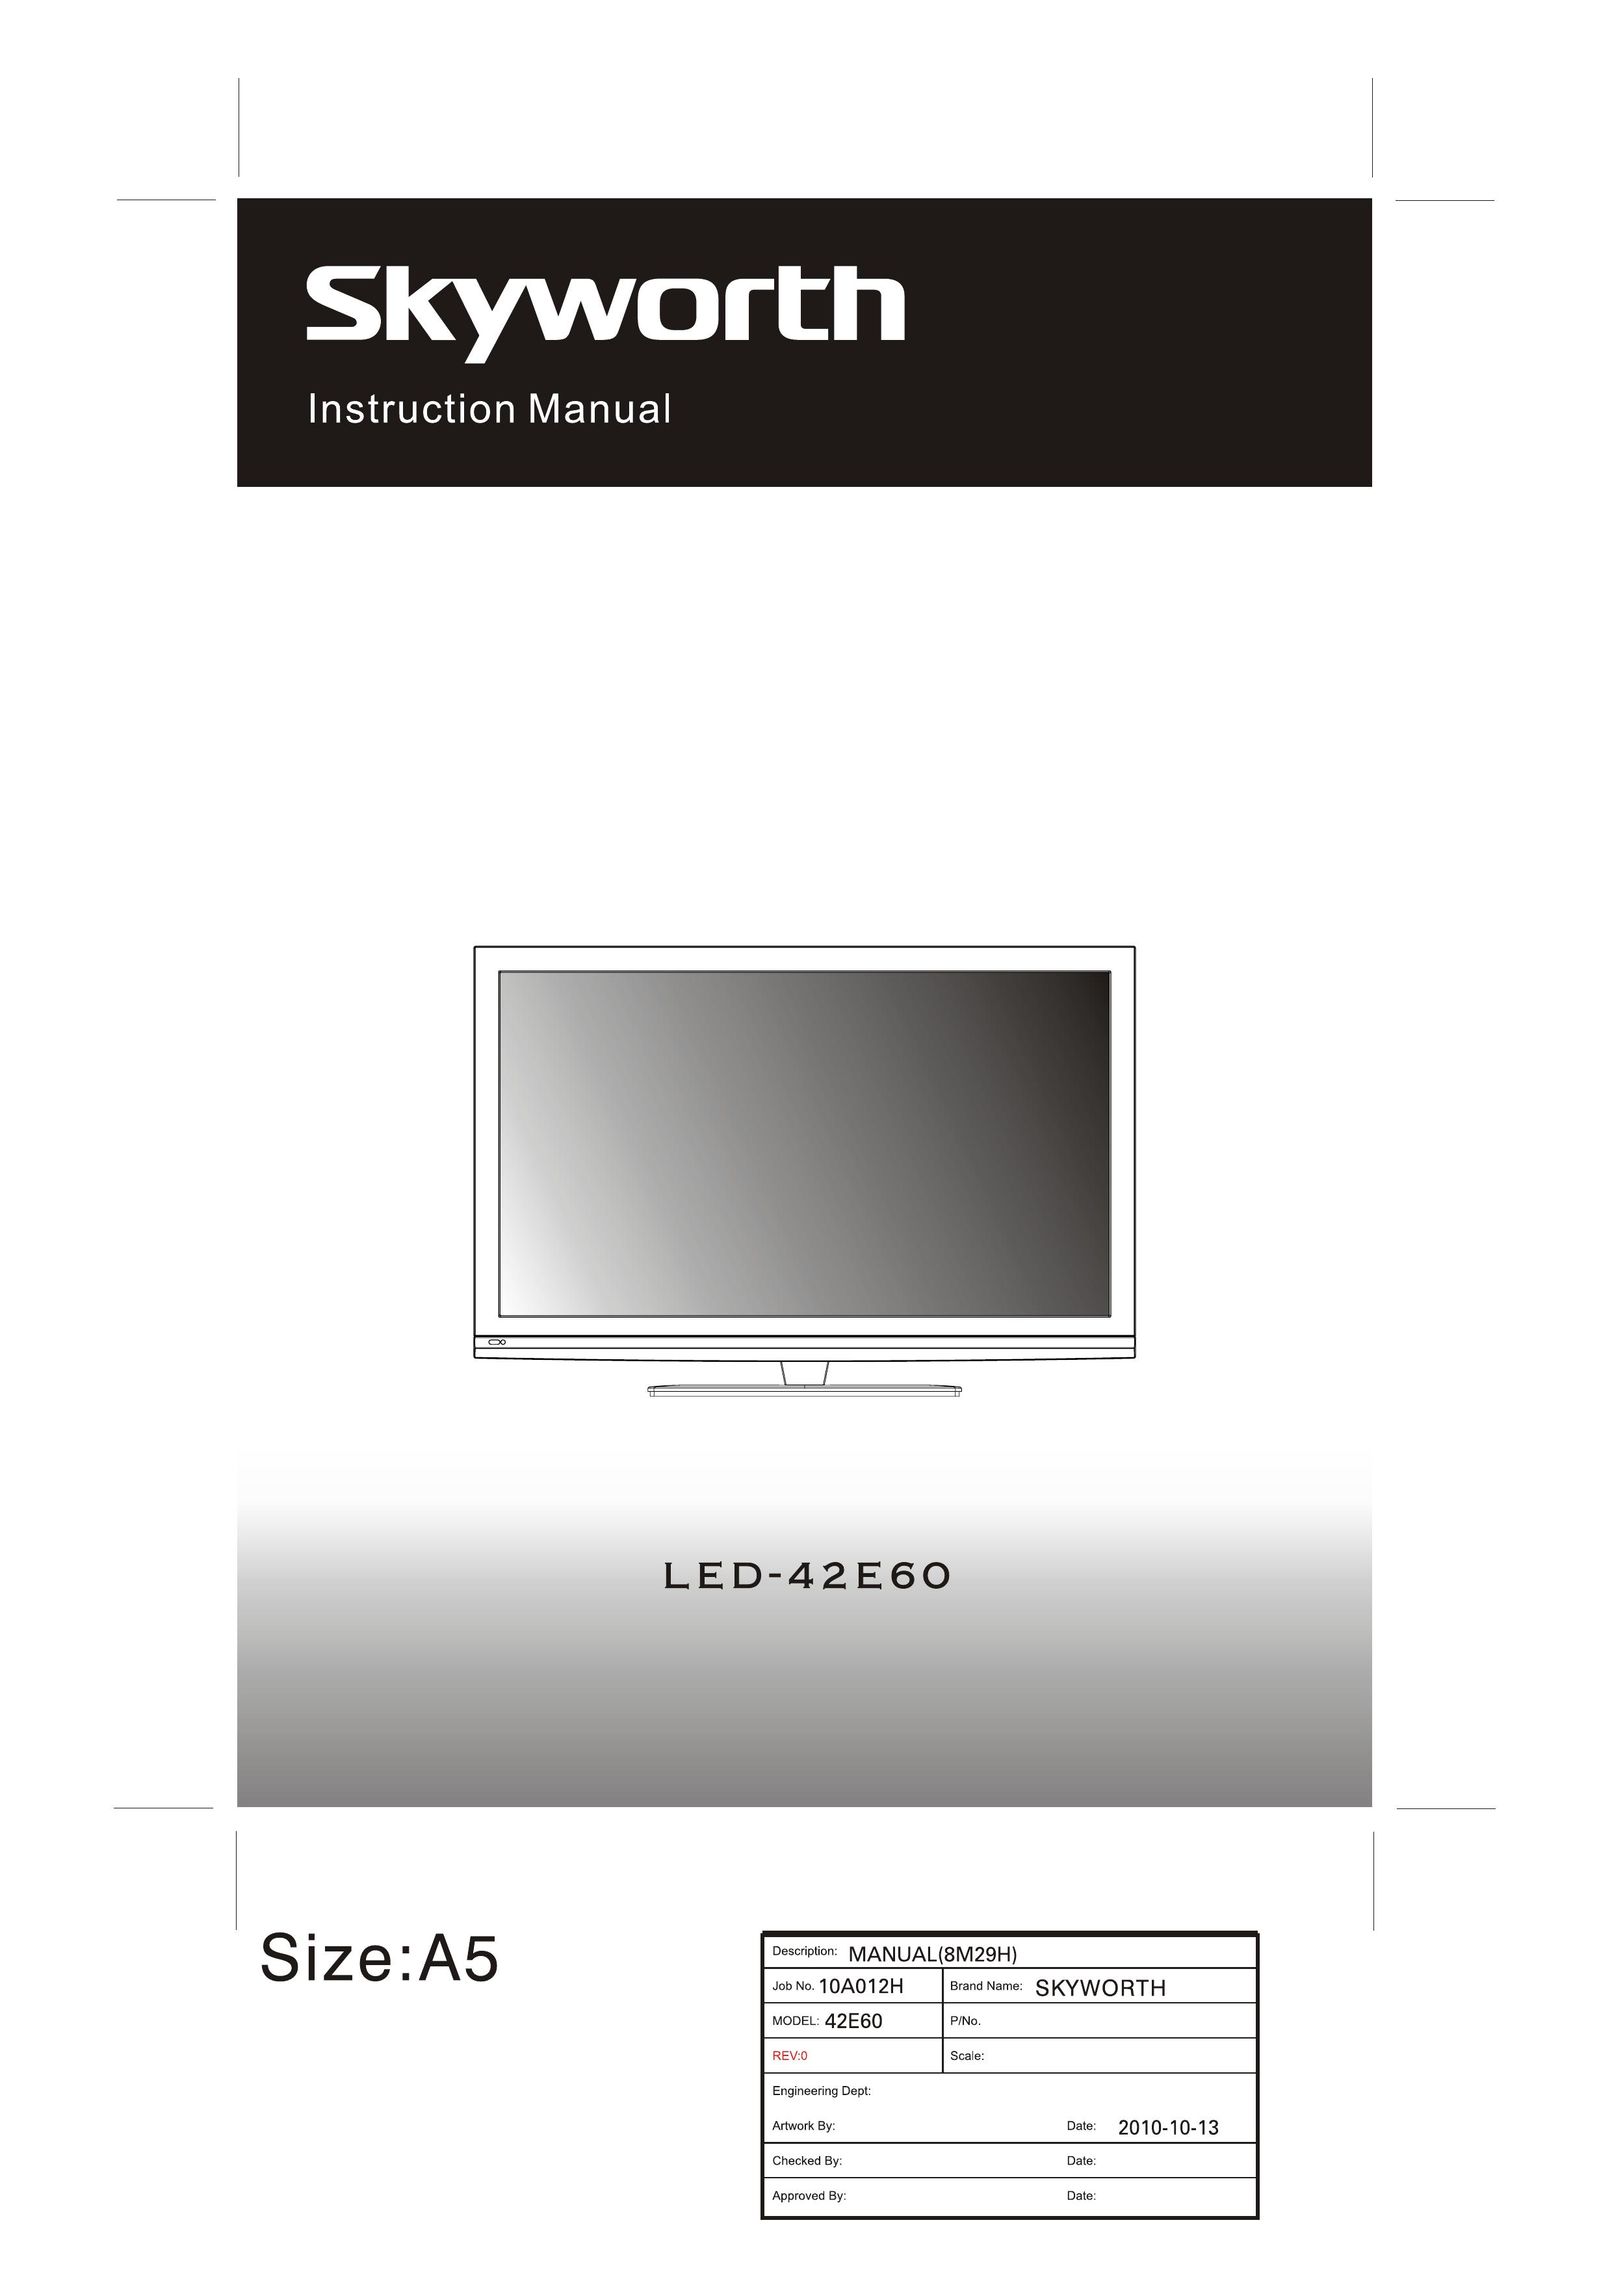 Skyworth LED-42E60 Flat Panel Television User Manual